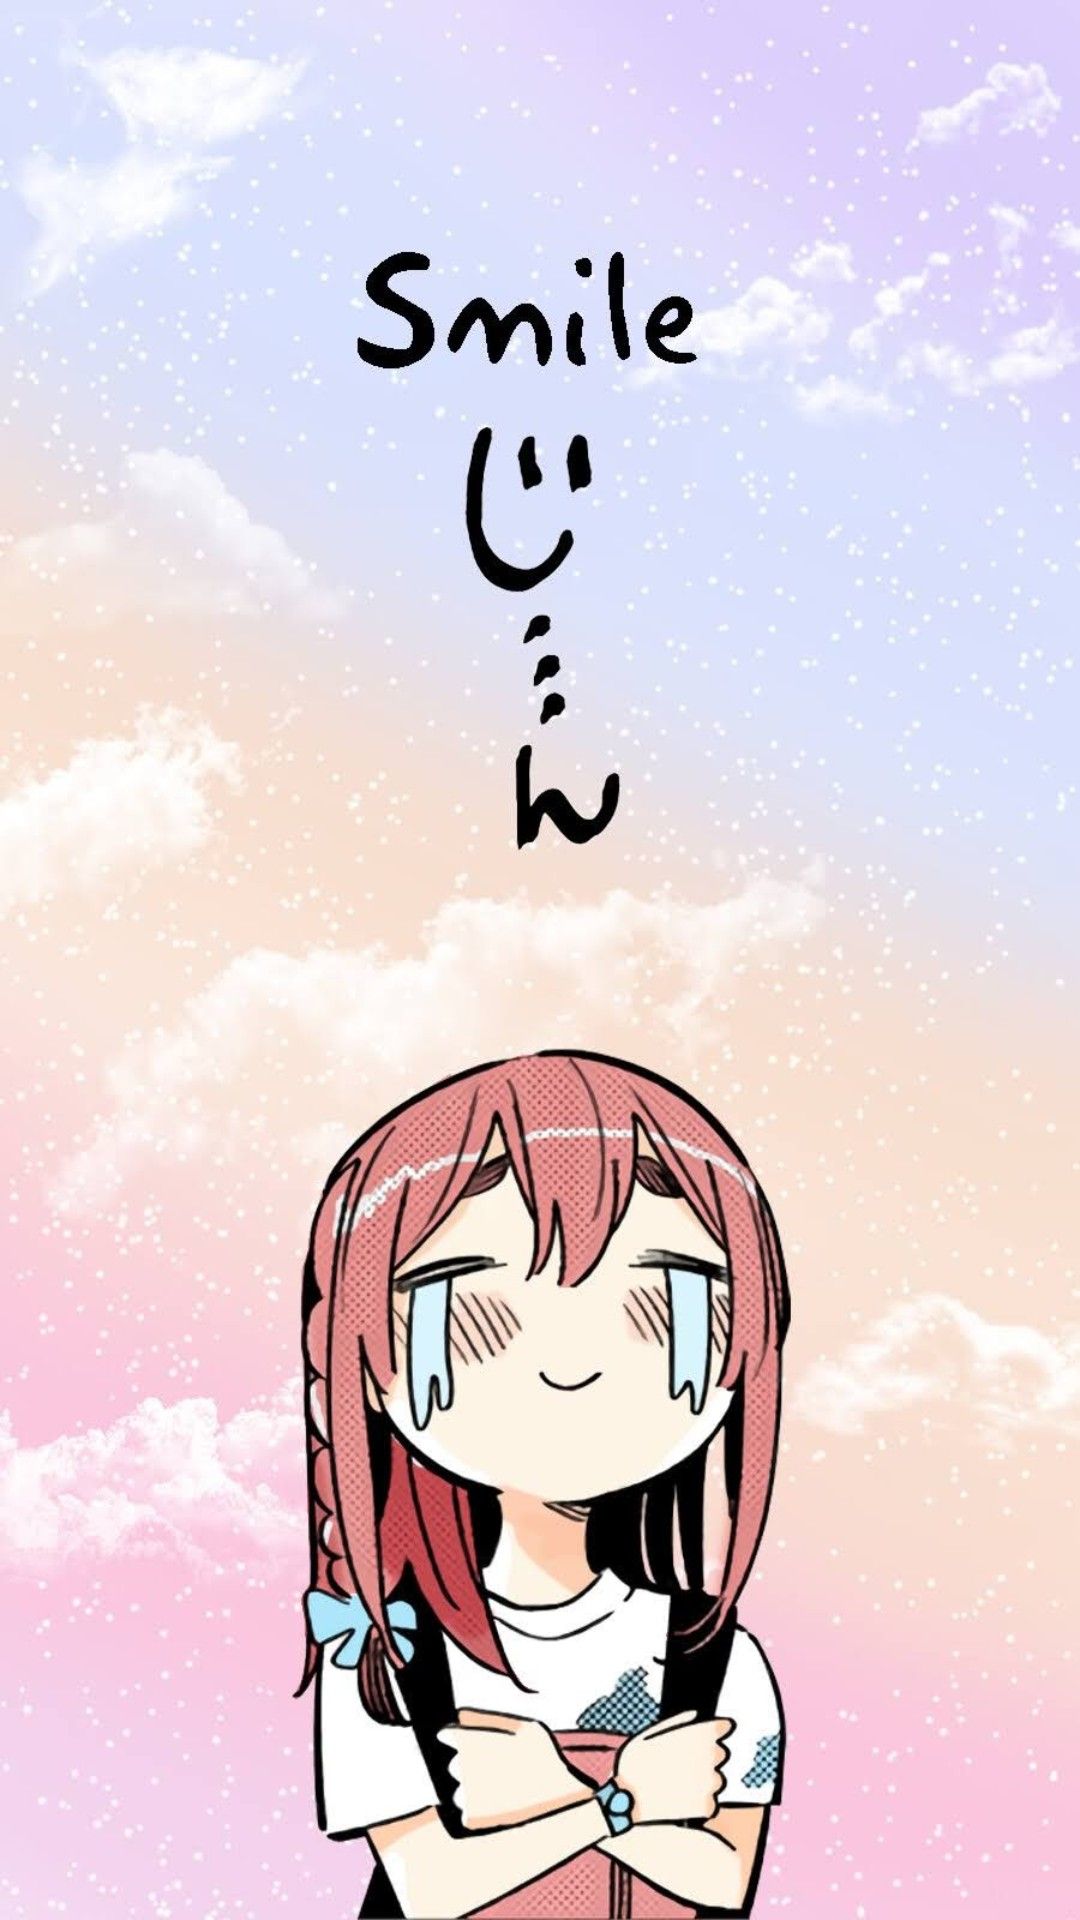 Sumi ❣️ wallpaper. Rent a girlfriend. Anime wallpaper, Anime background, Cute anime pics